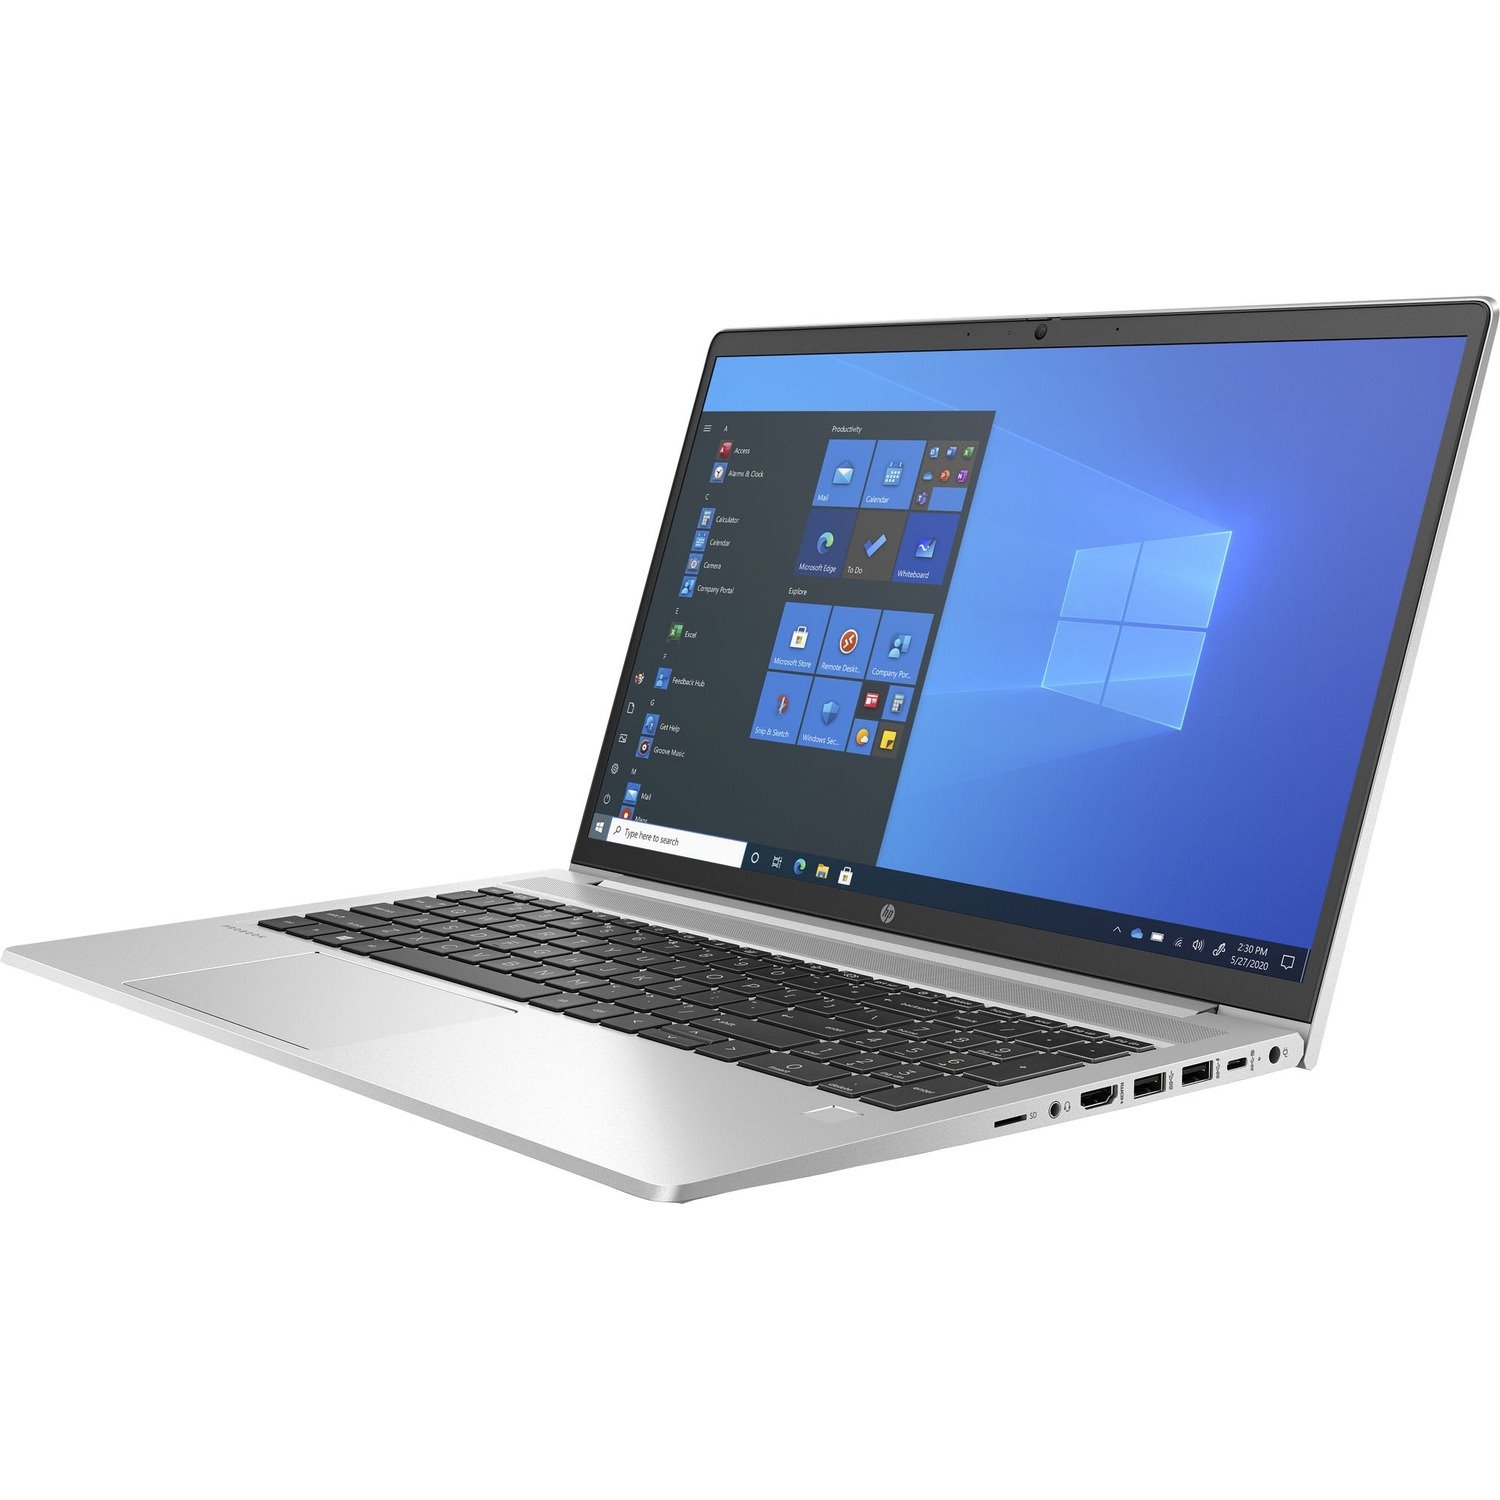 HP ProBook 450 G8 (365N2PA) 15.6" (1920x1080) NoteBook - Intel i5-1135G7 - 8GB DDR4 Memory - 256GB SSD - Windows 10 Pro - 1Yr Onsite